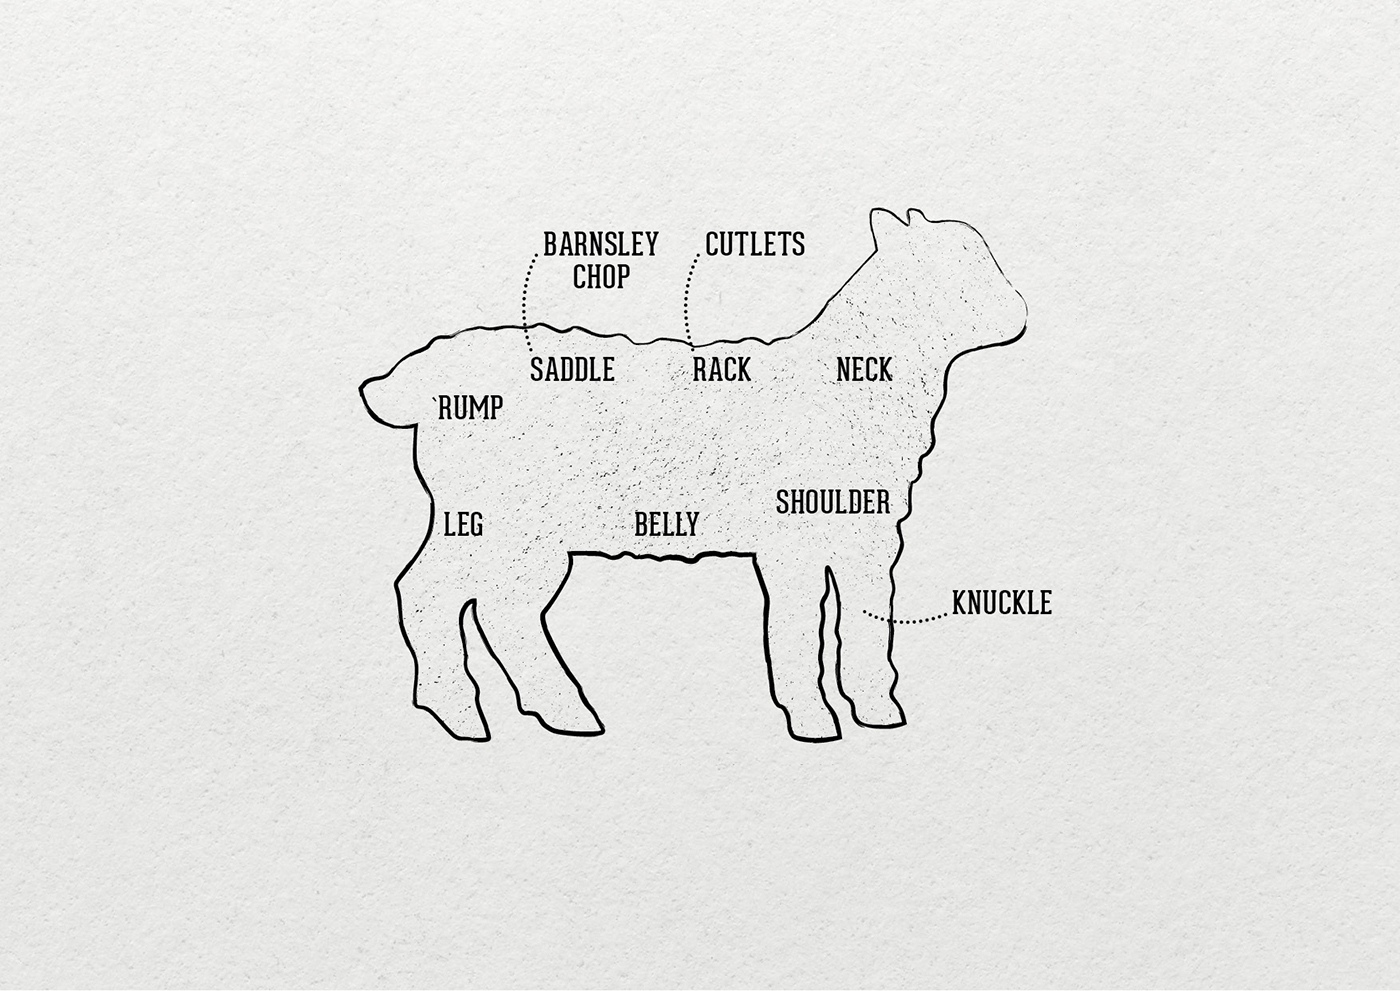 Lamb_cuts_illustration_by Designbite